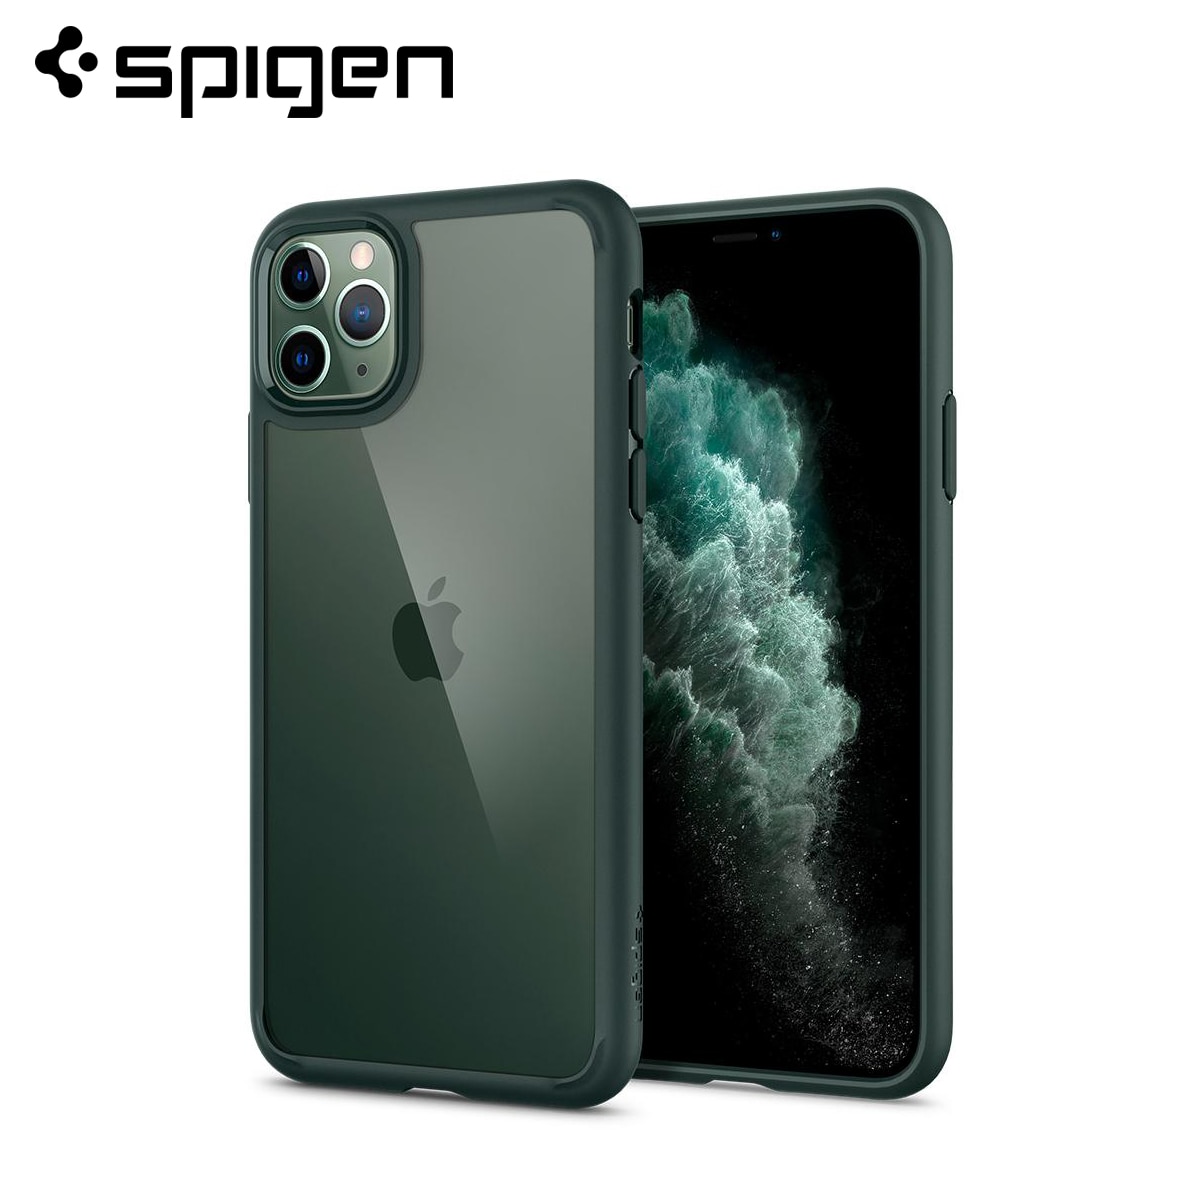 Spigen Ultra Hybrid Hard Clear Back Panel Soft Bumper Hybrid MIL-STD Drop Resistance Case for iPhone 11 Pro Max / 11 Pro / 11